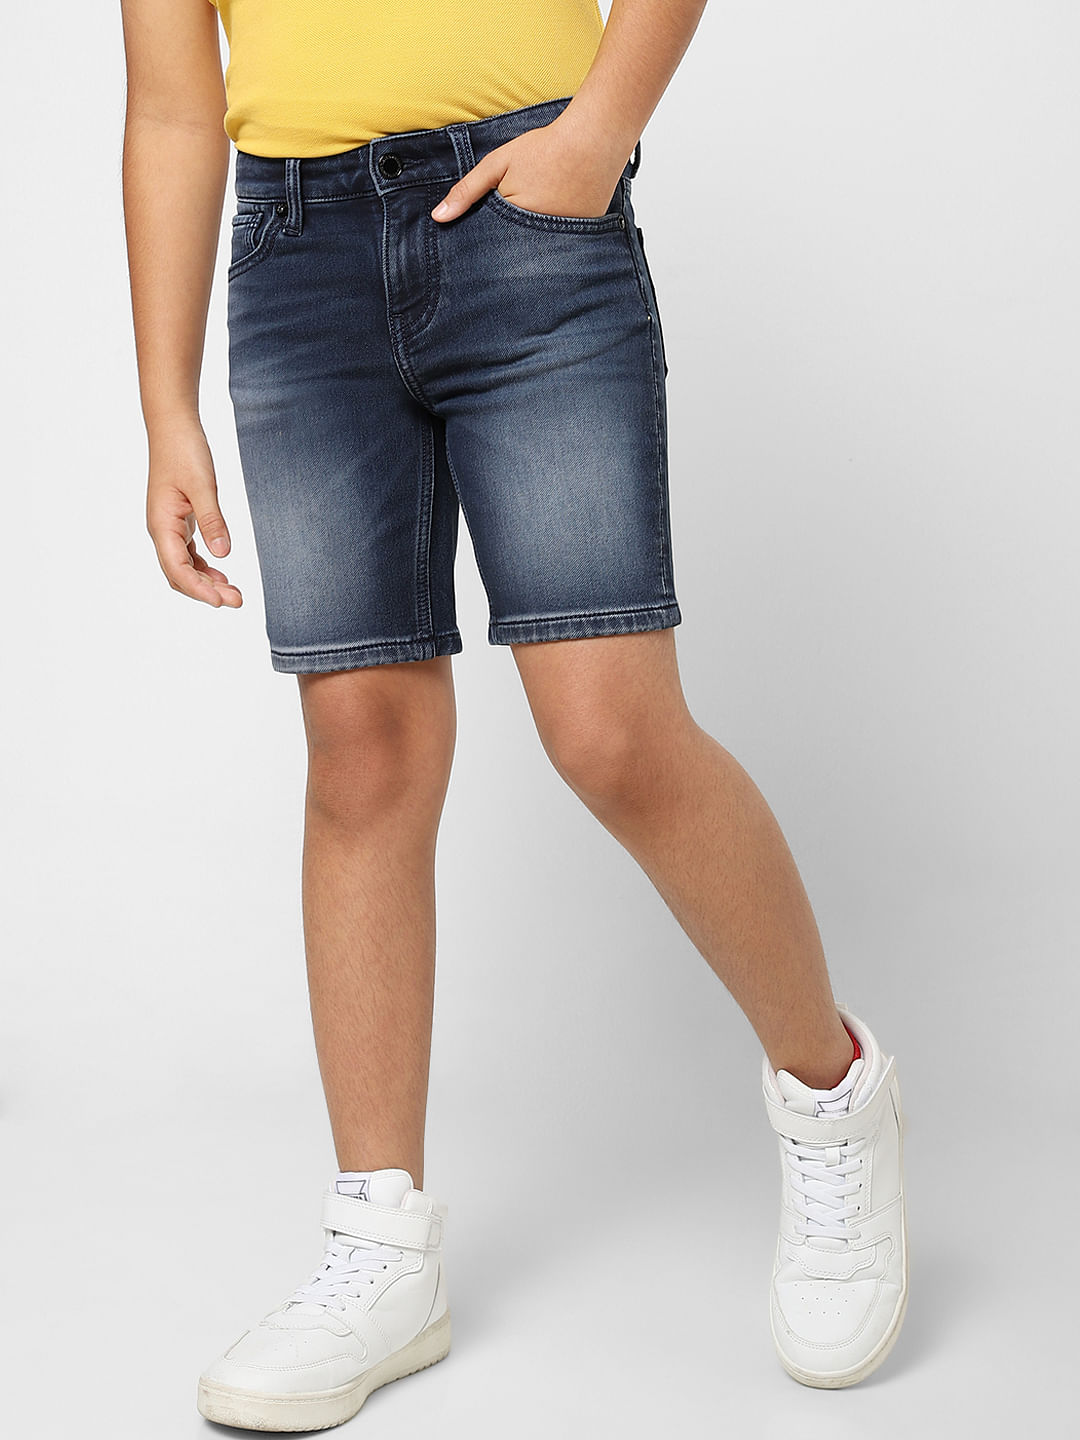 SweatyRocks Women's High Waist Denim Shorts Straight Leg Raw Hem Jean Shorts  Summer Hot Pants with Pockets Light Wash XS at Amazon Women's Clothing store